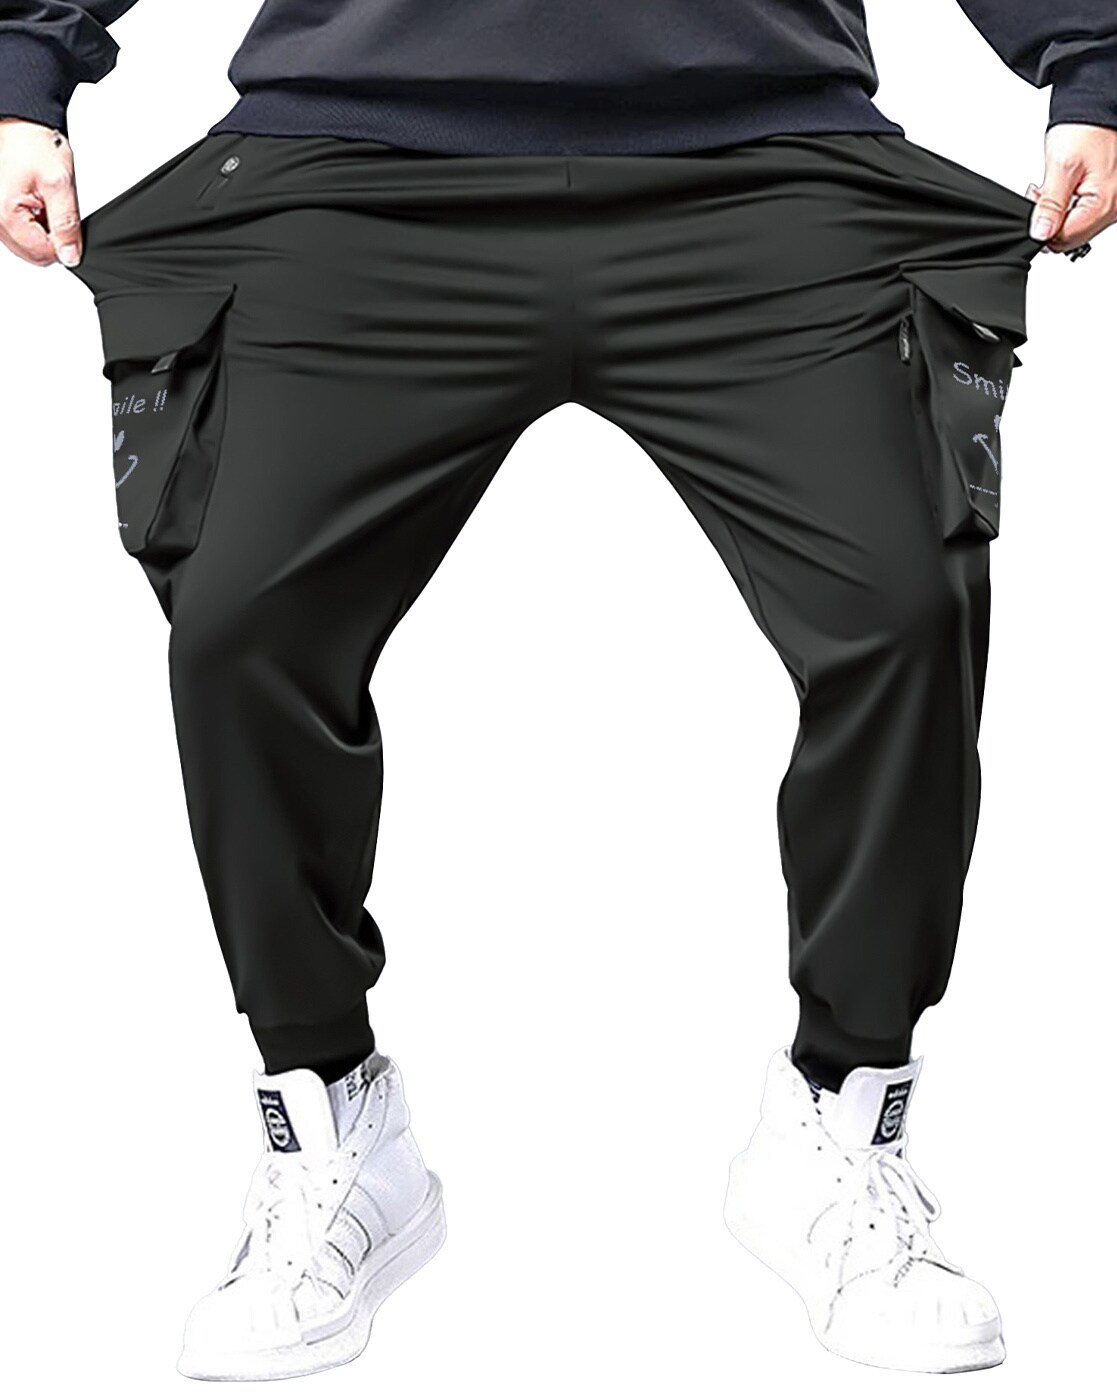 Jockey Slim Fit Track Pant for Men with Zipper PocketAM42BLK